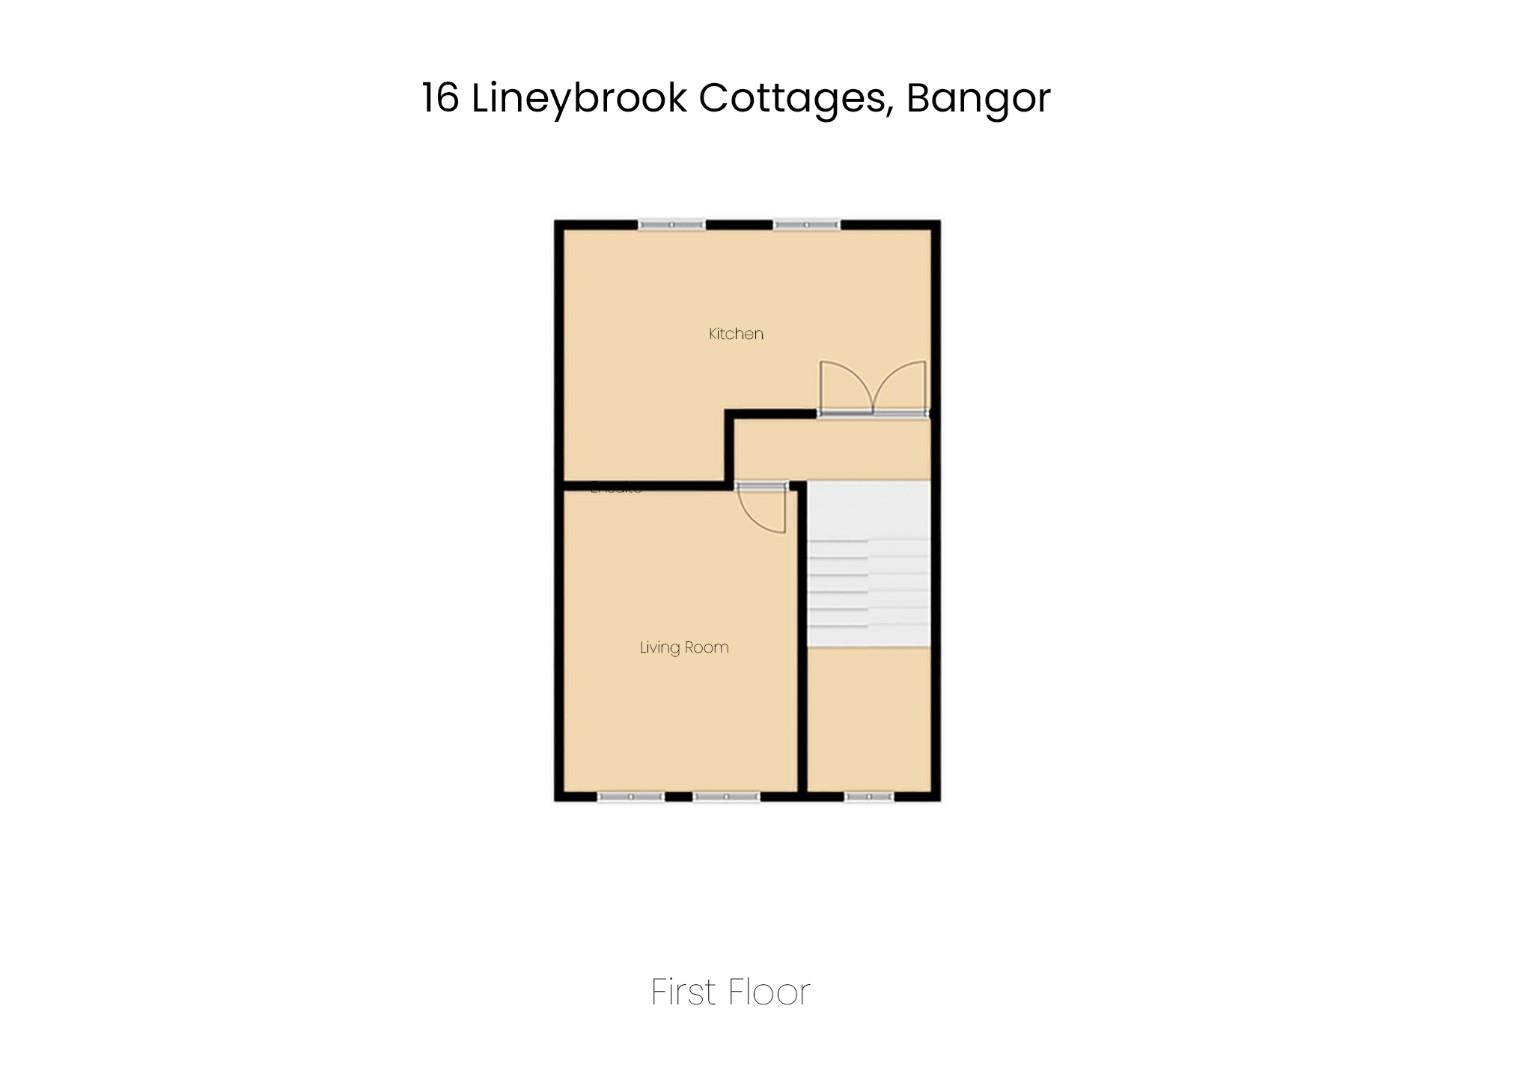 16 Lineybrook Cottages